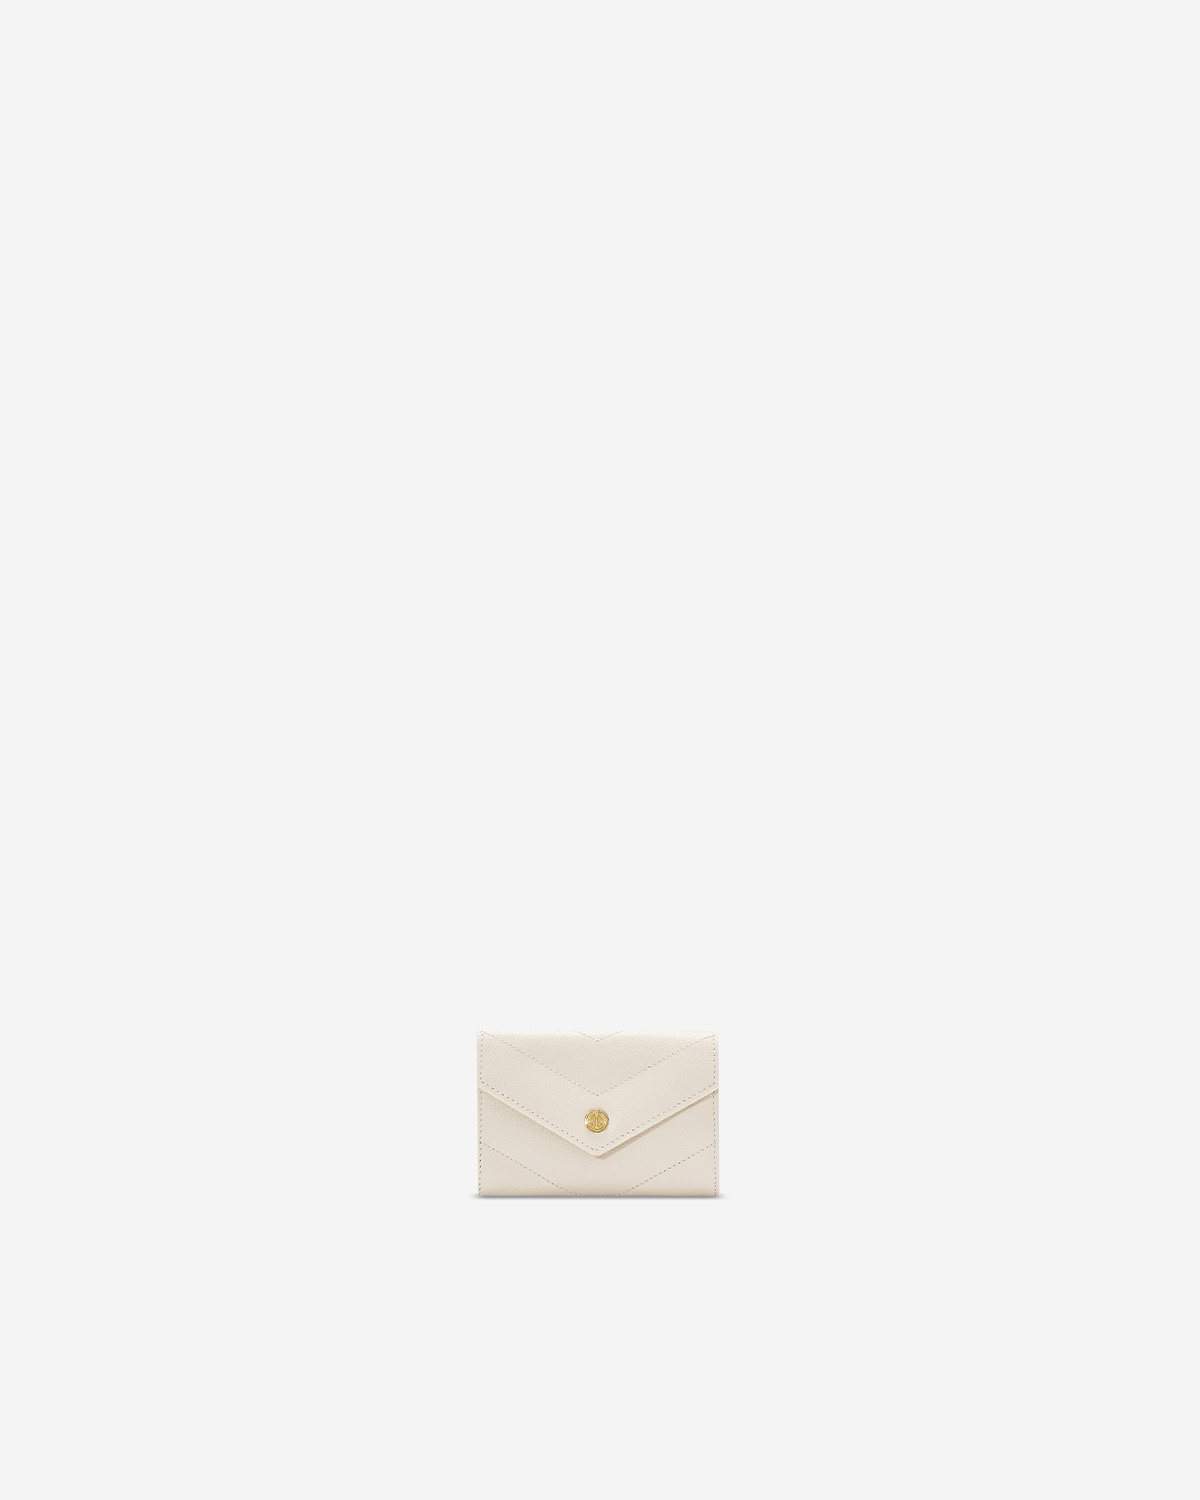 VERA CAVIAR Envelop Wallet in Oyster กระเป๋าสตางค์ทรง envelop ทำจากหนังแท้ลาย Caviar สี Oyster